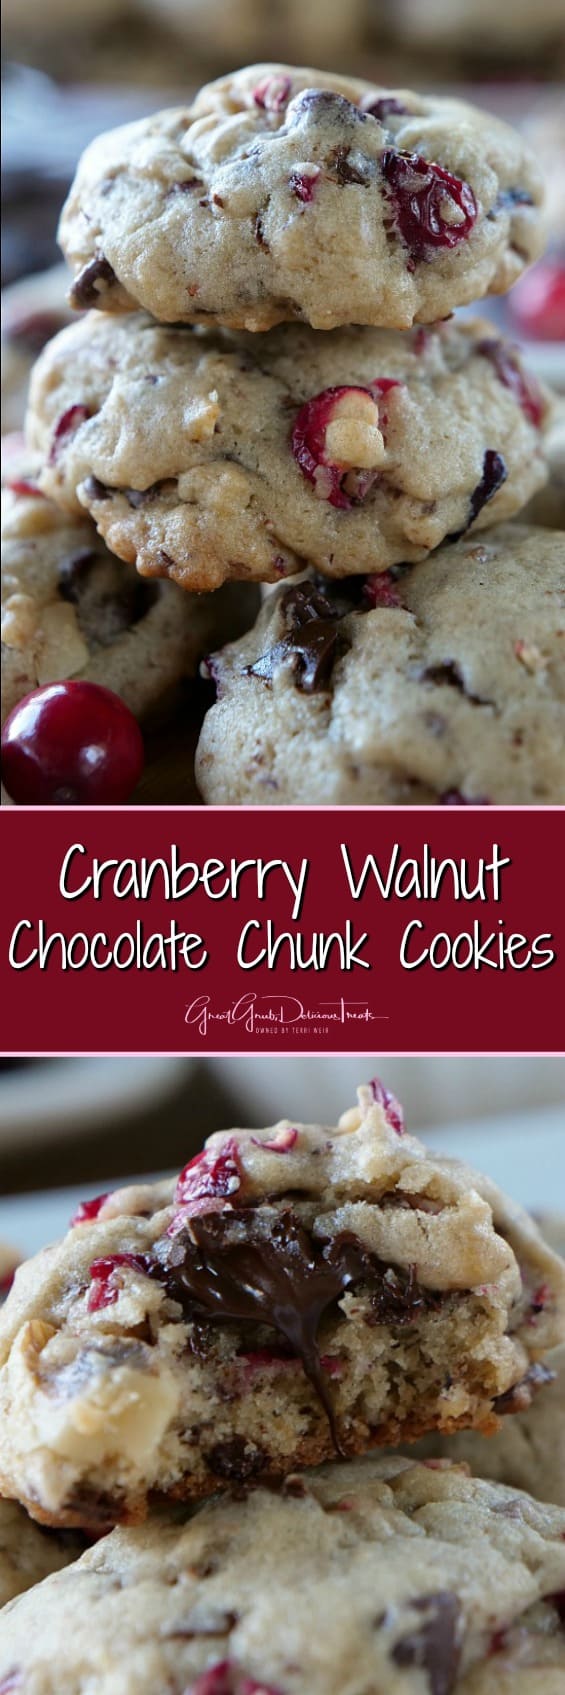 Cranberry Walnut Chocolate Chunk Cookies